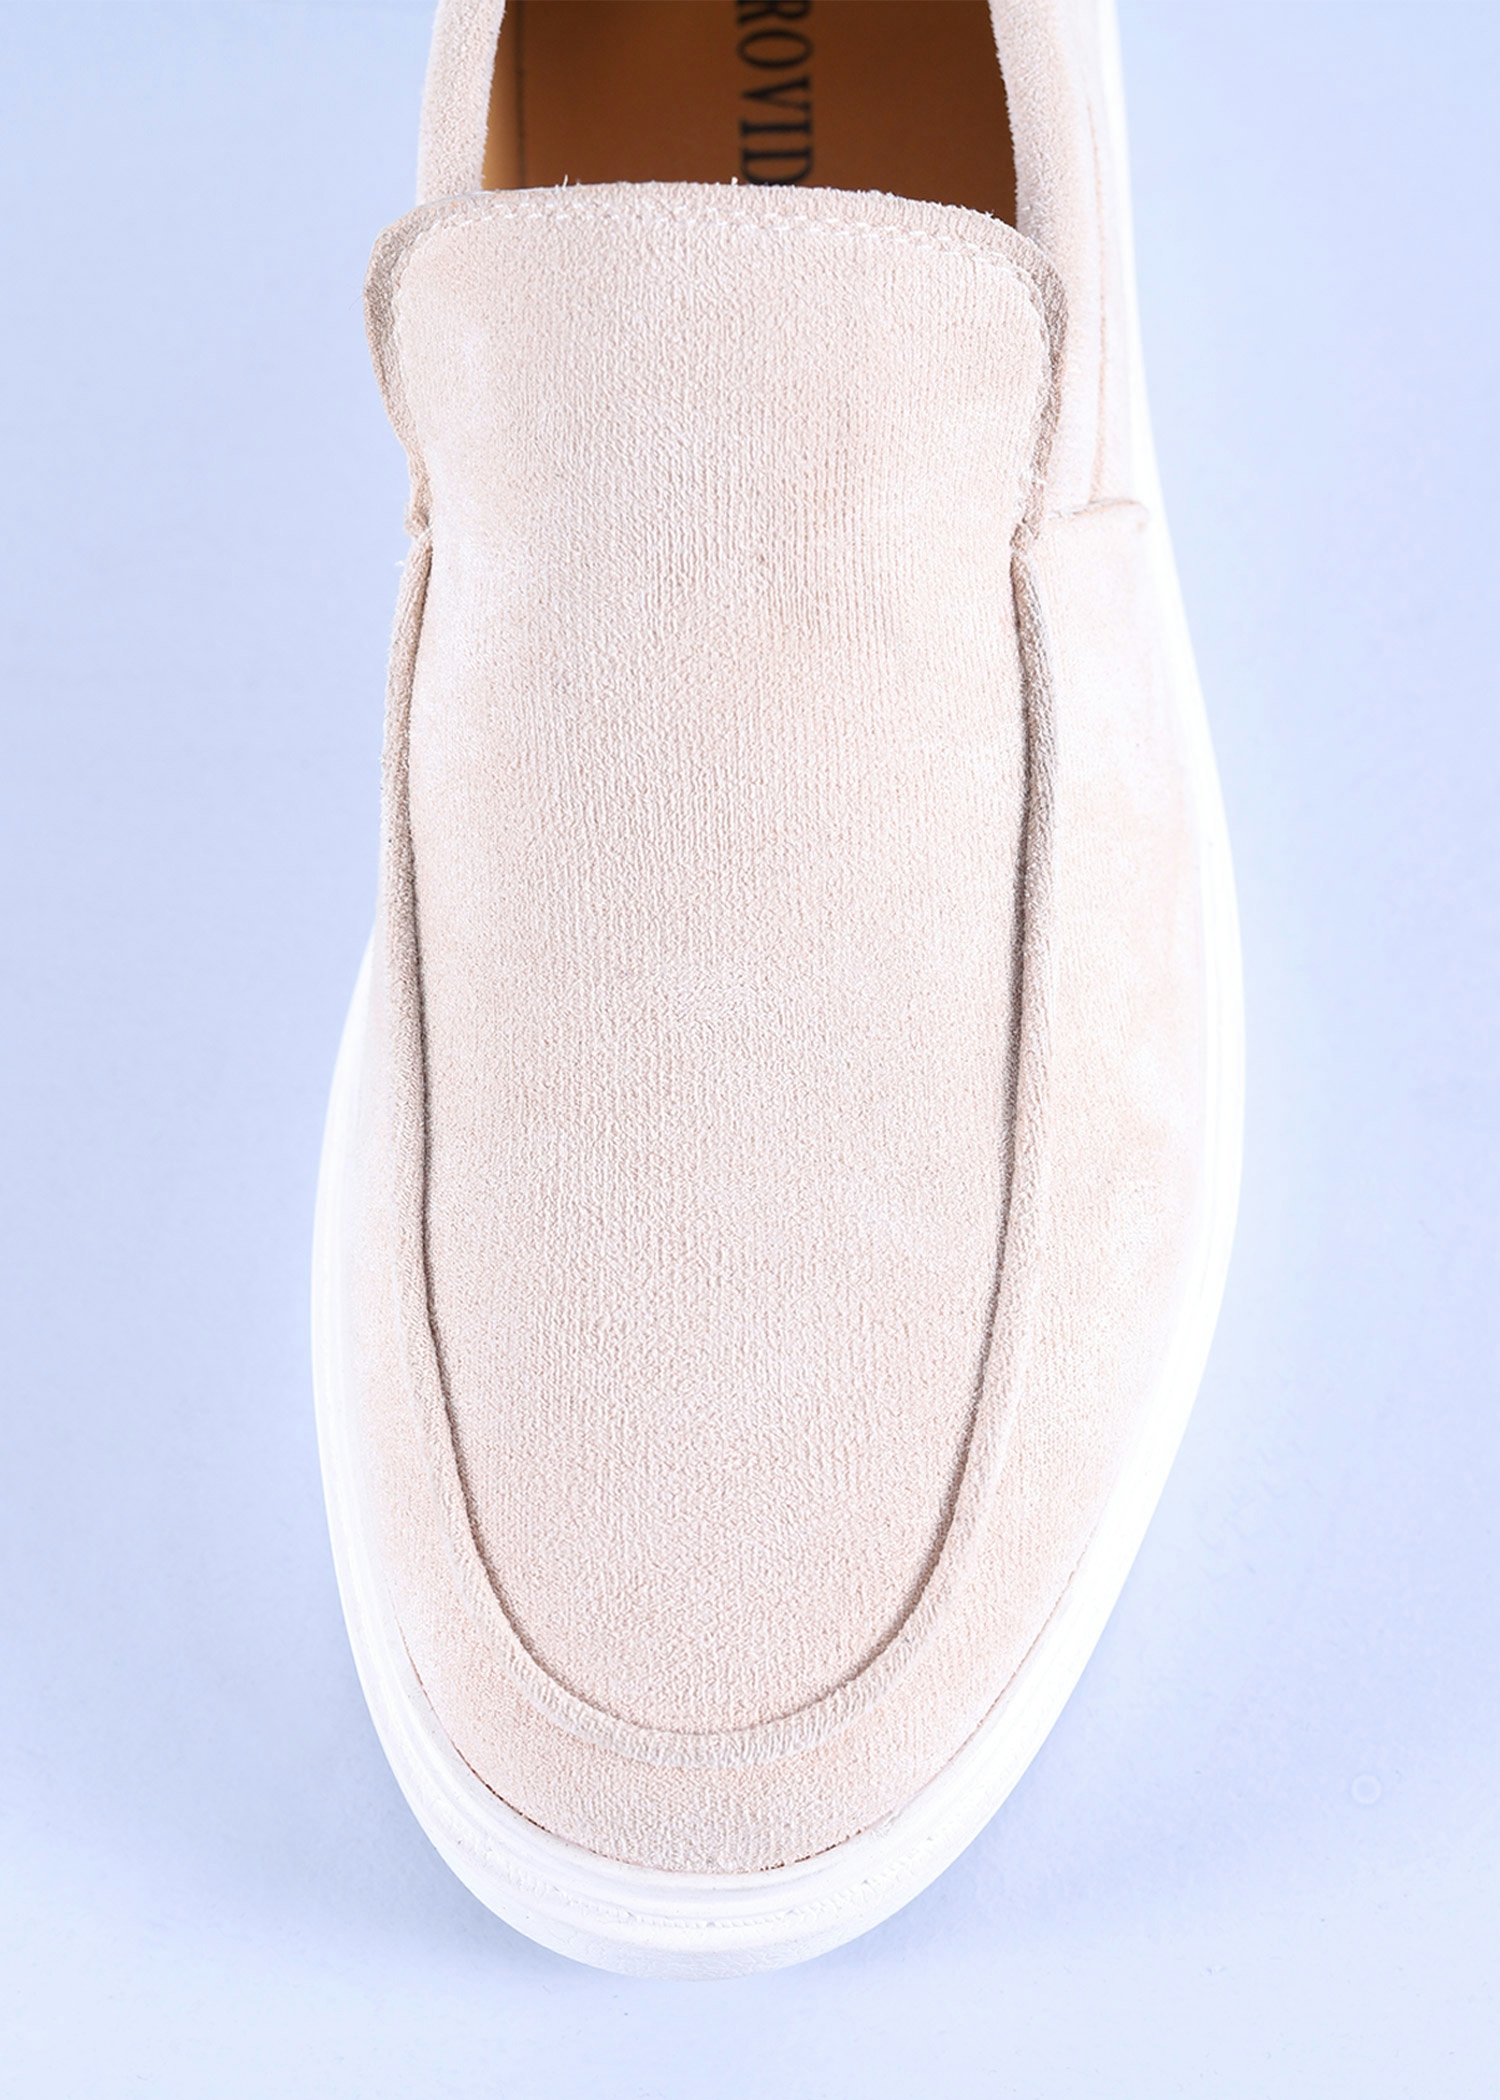 segura mens shoes cream color top close